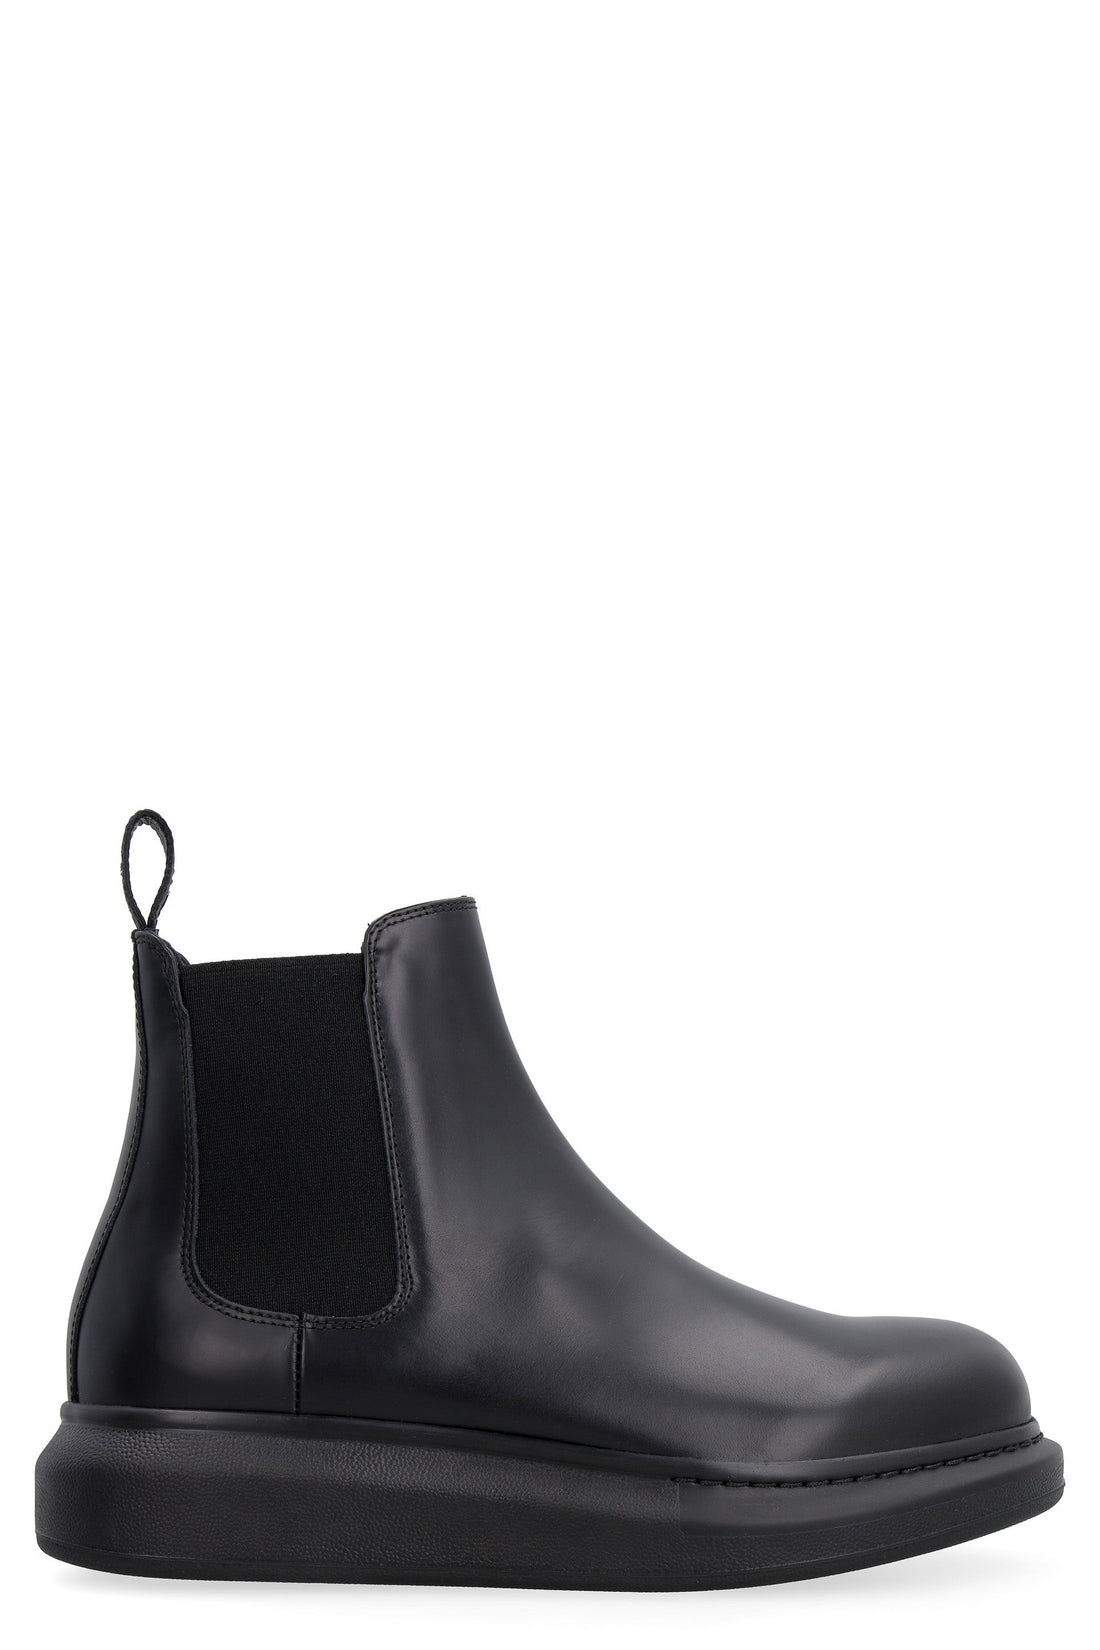 Alexander McQueen-OUTLET-SALE-Hybrid leather Chelsea boots-ARCHIVIST